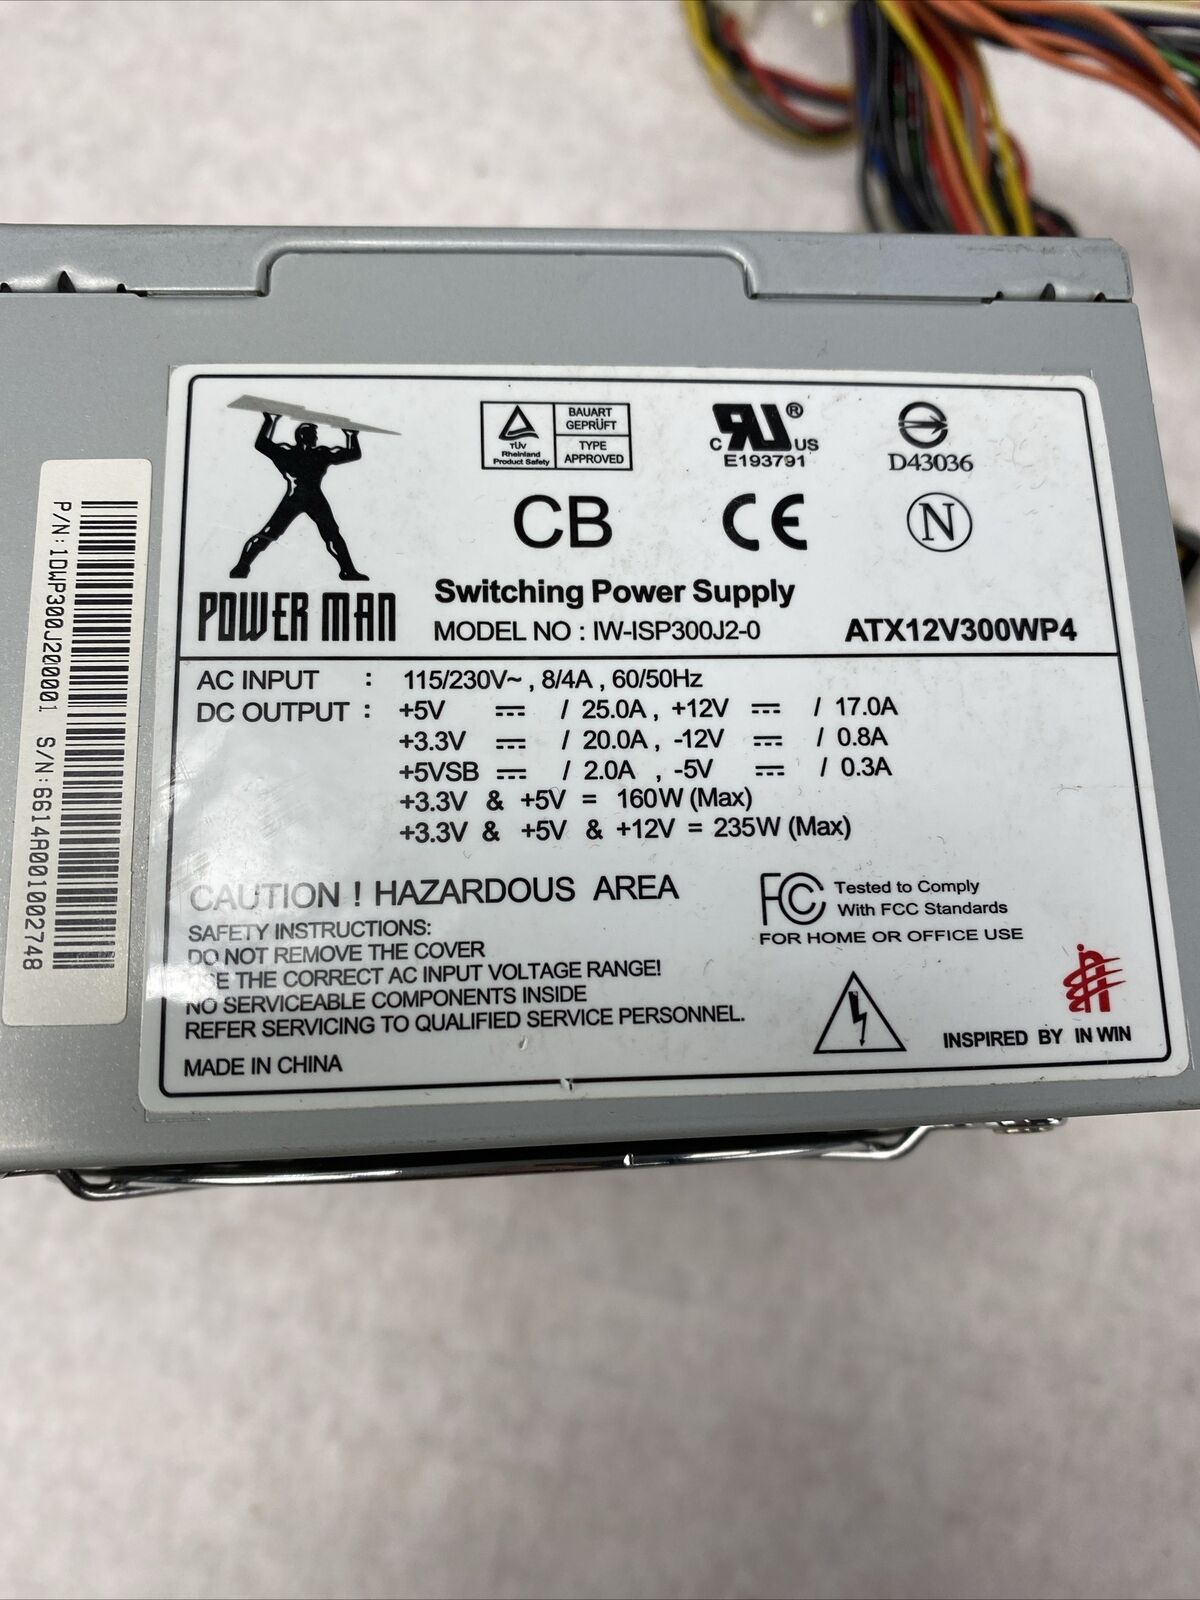 Power Man IW-ISP300J2-0 Desktop Computer Power Supply 1DWP300J200001